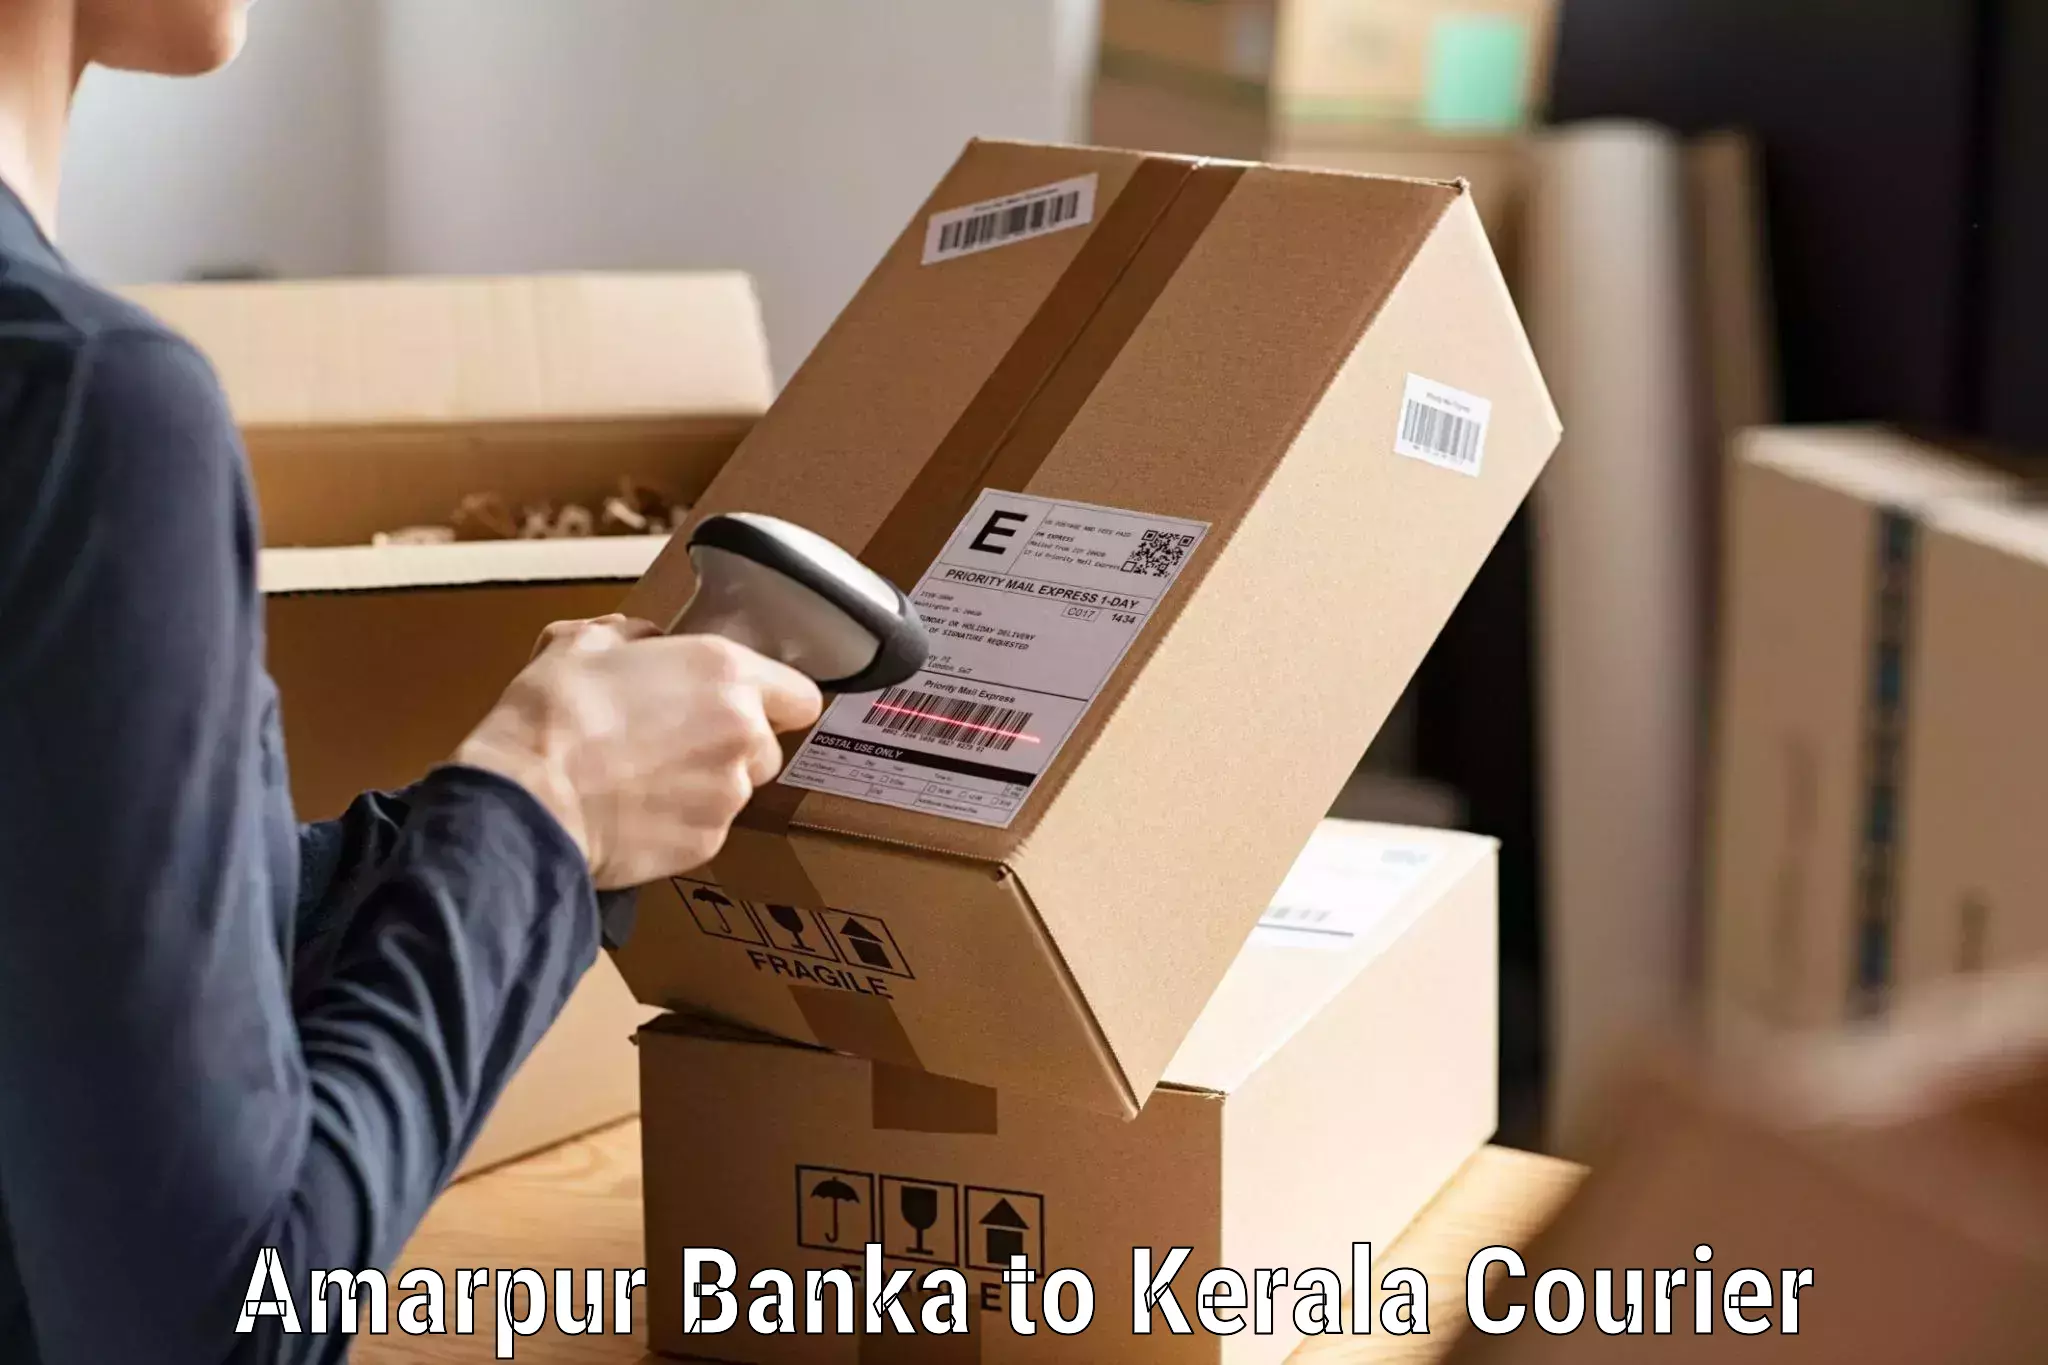 Efficient parcel service Amarpur Banka to Kerala